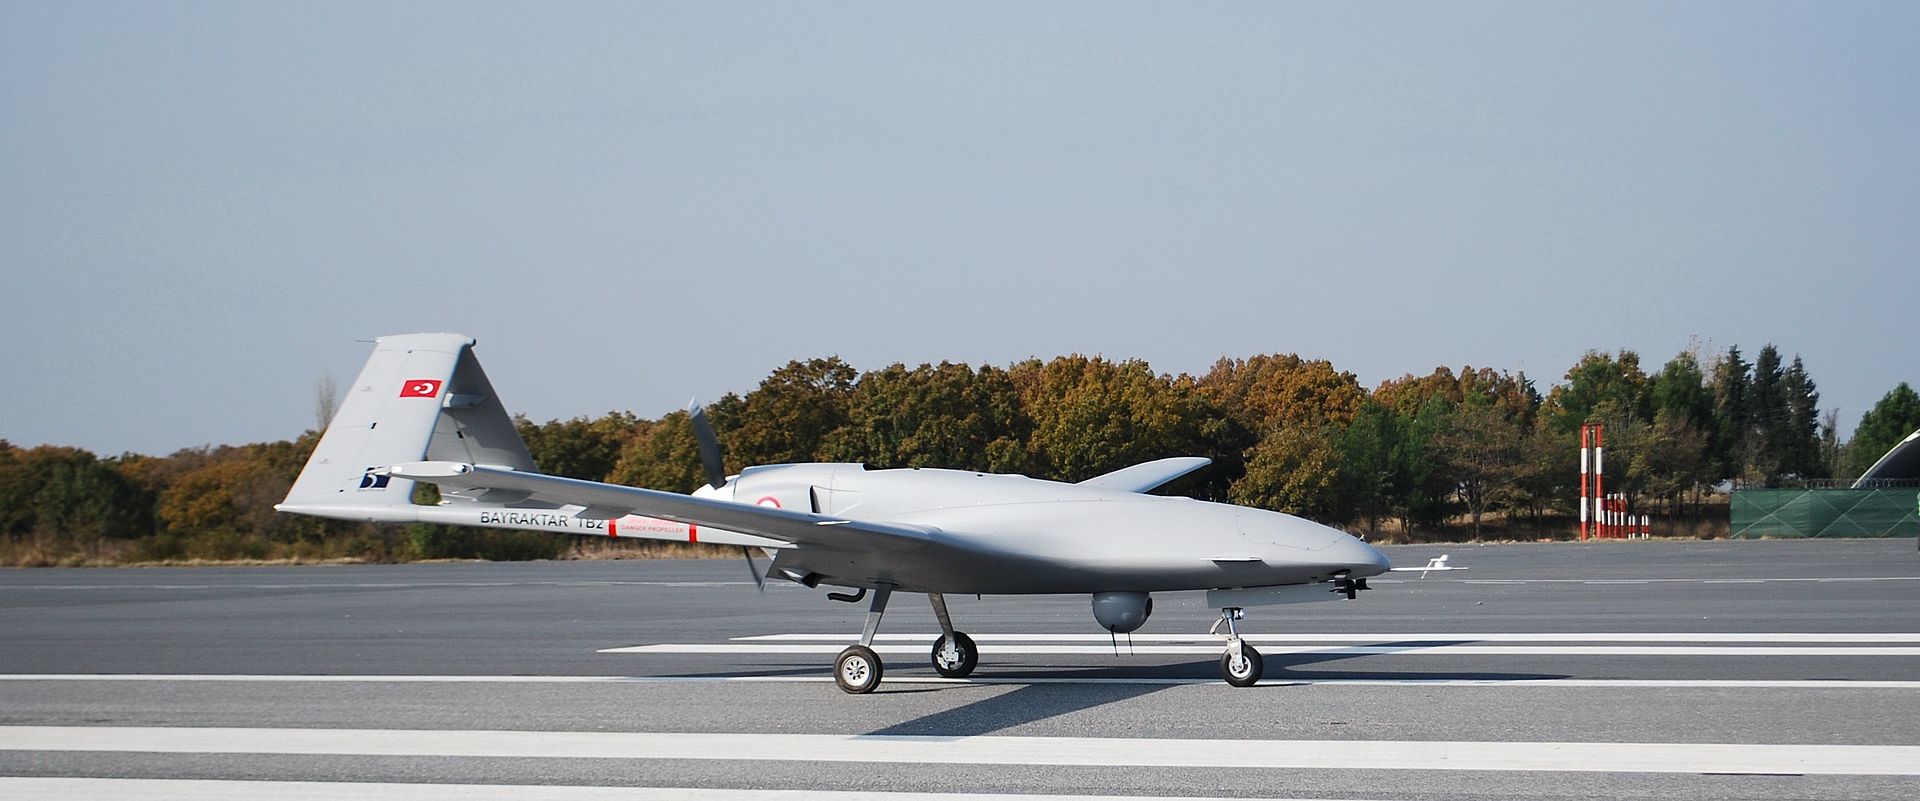 Lithuania set to deliver Bayraktar TB2 drone to Ukraine